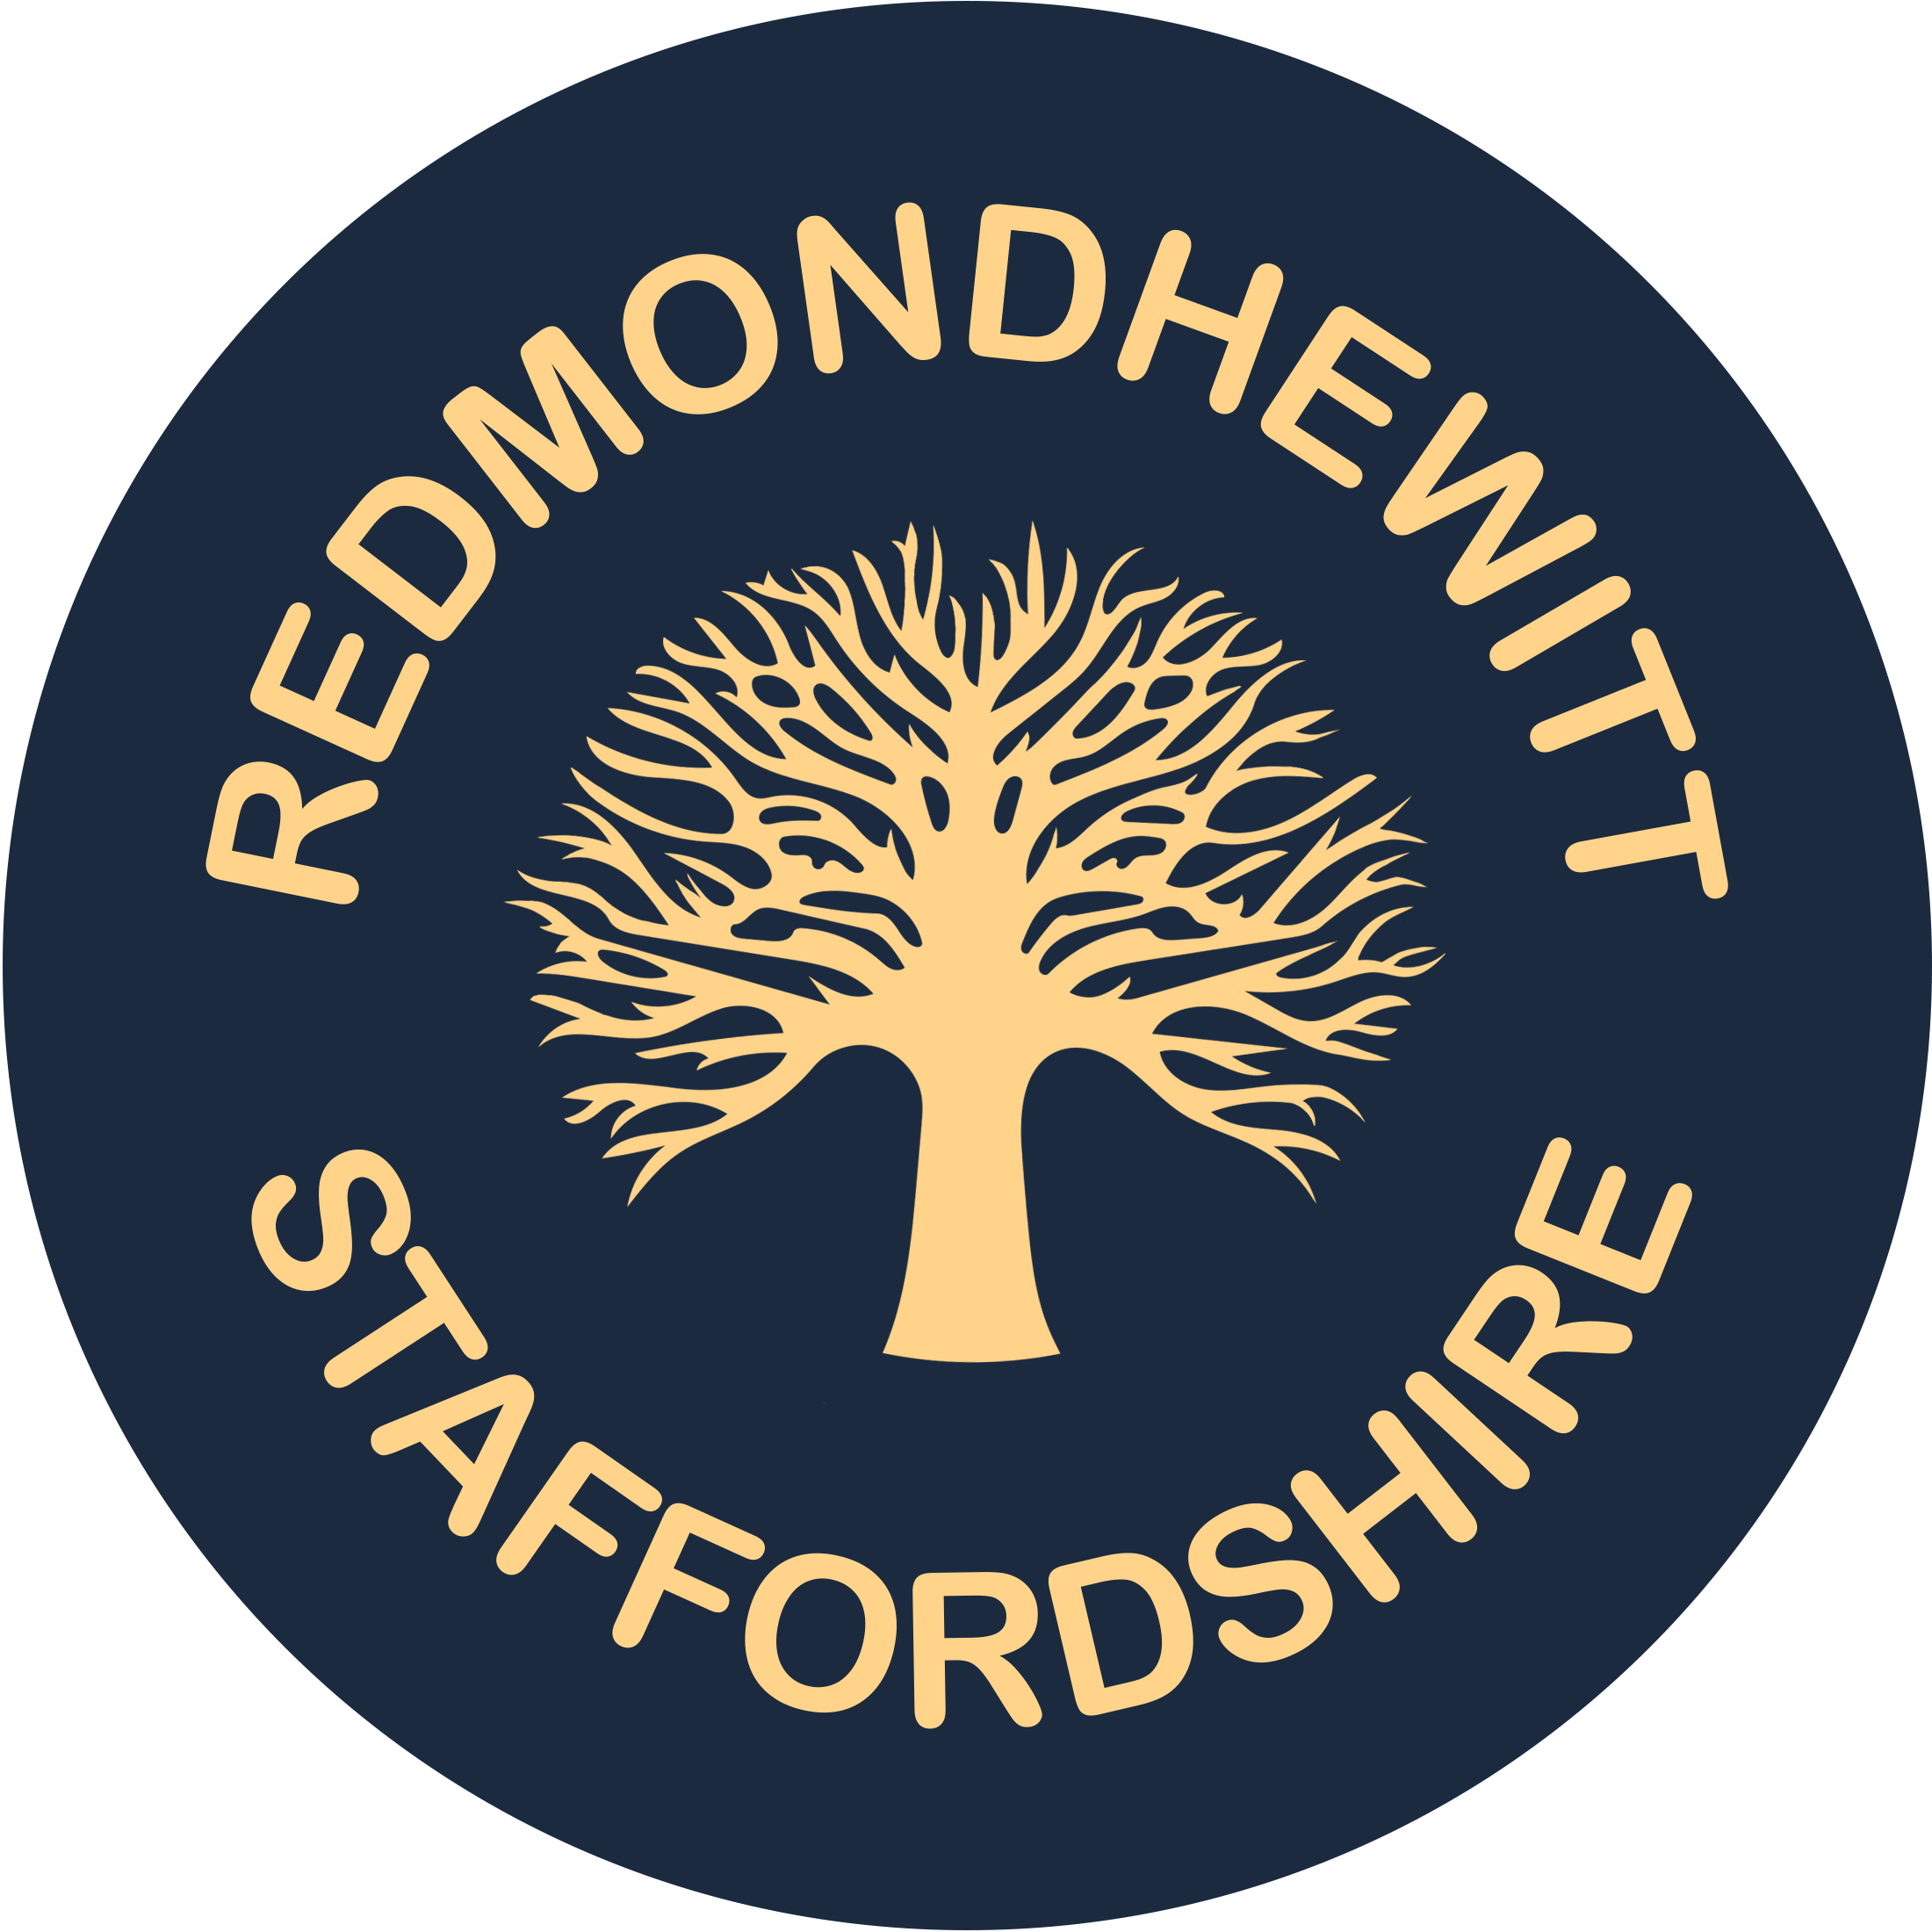 RedmondHewitt Ltd